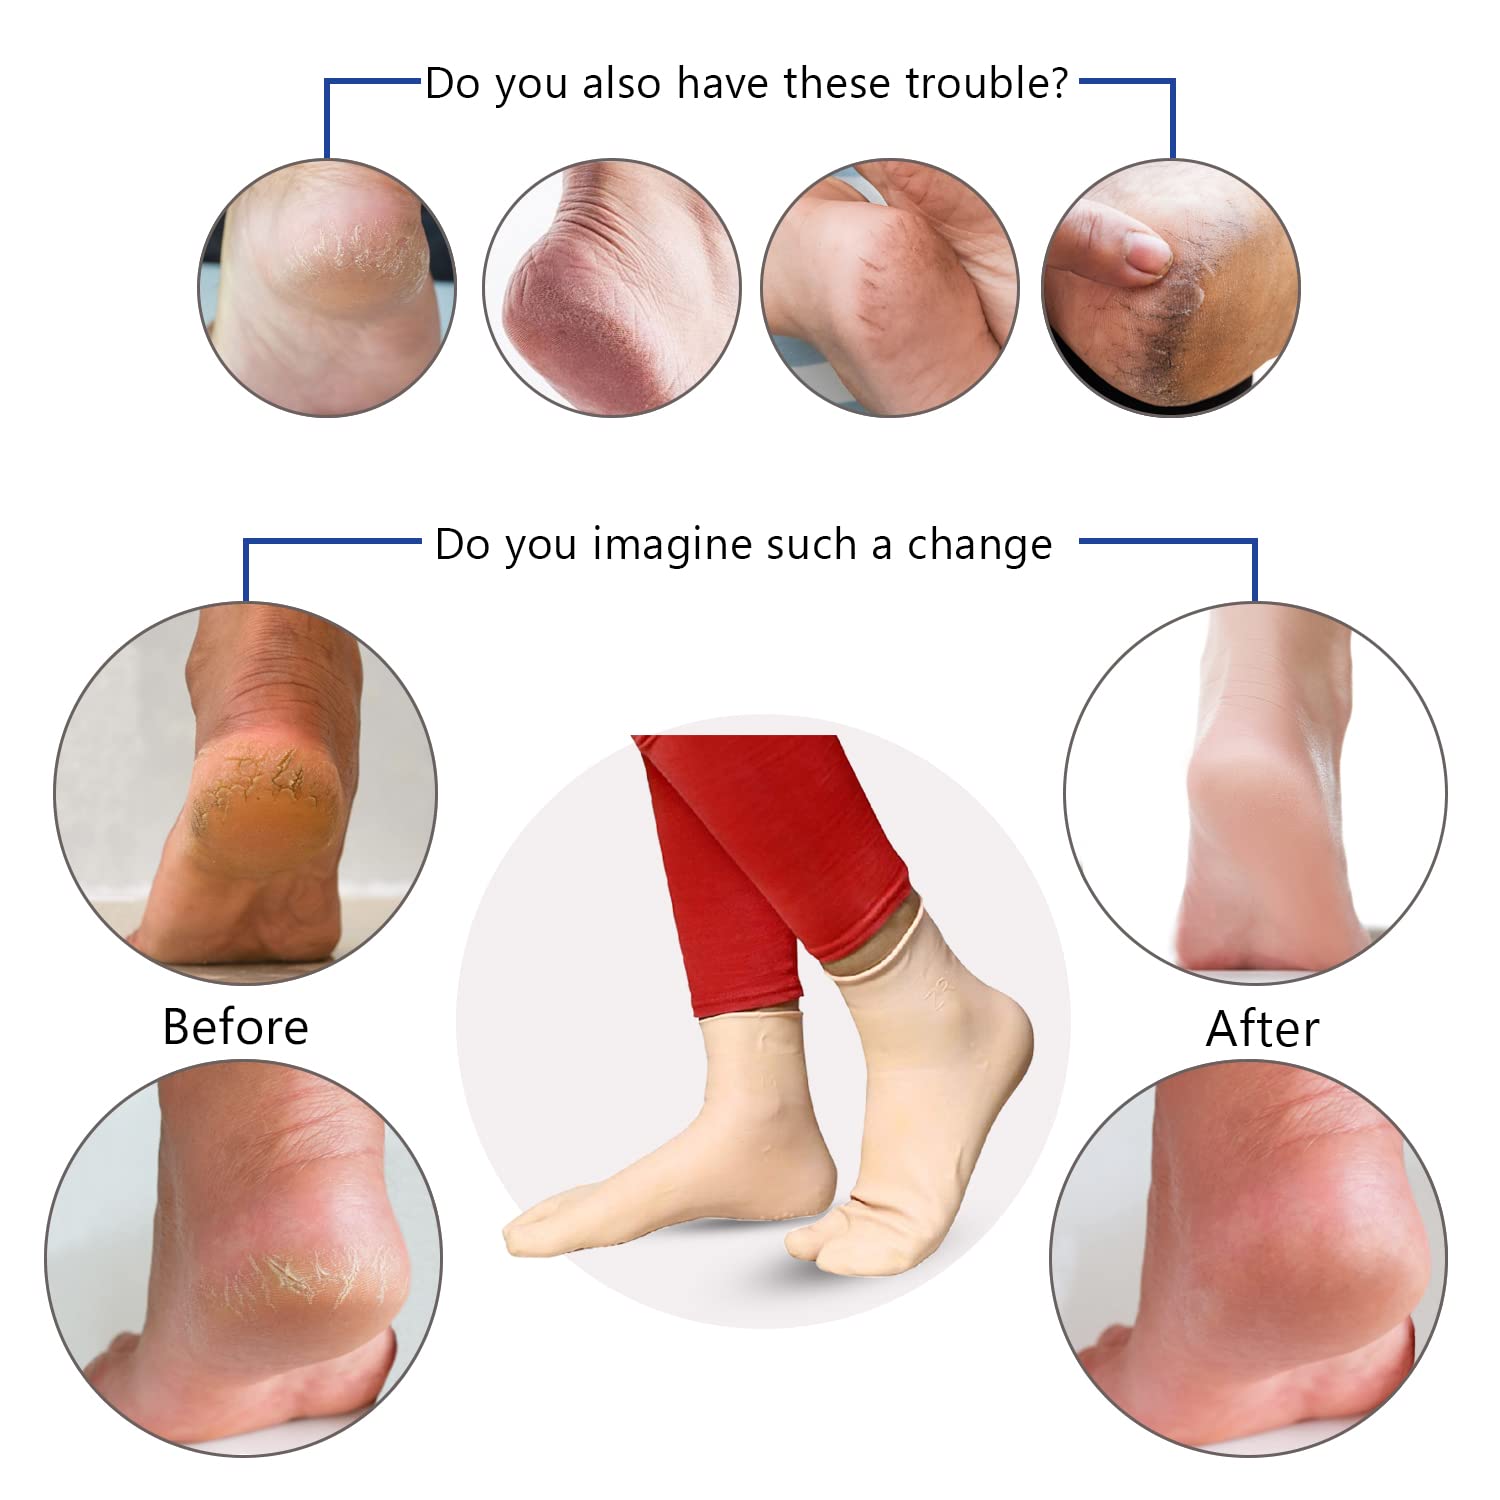 Dr Foot Silicone Socks | Anti Slip Silicone Moisturizing Socks | Dry Cracking Skin | For Both Men & Women | Full Length, Medium Size – 1 Pair